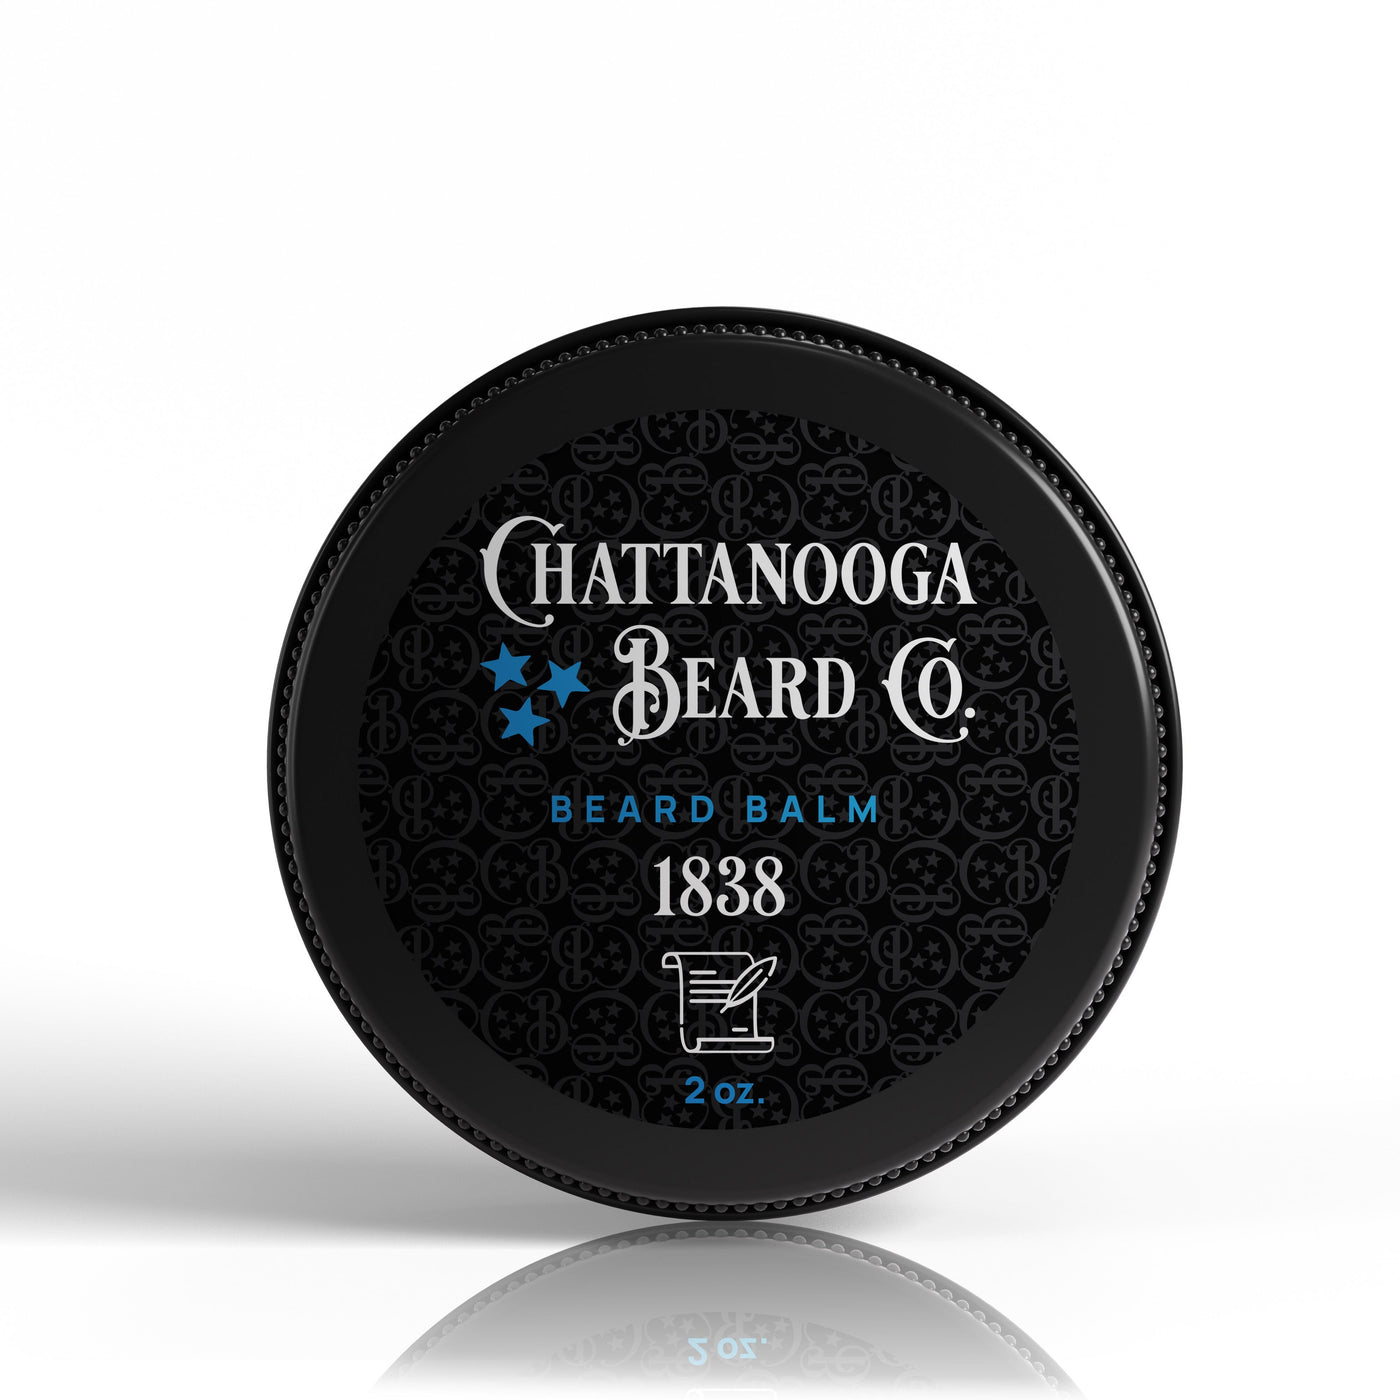 Chattanooga Beard Co. - Beard Balm Balm Chattanooga Beard Co. 1838 